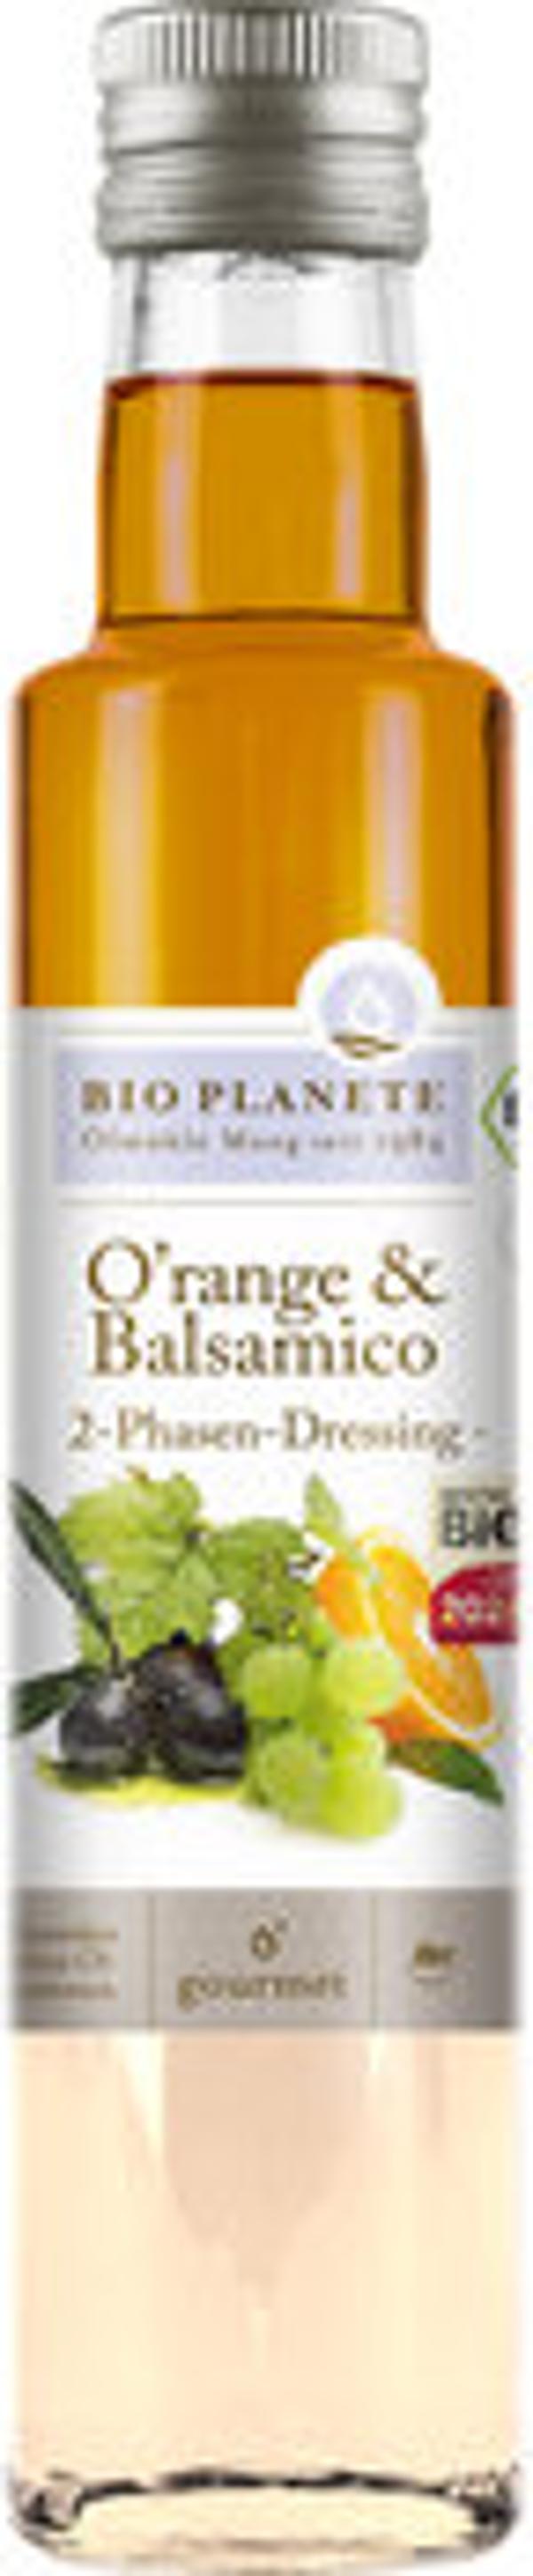 Produktfoto zu O'range & Balsamico 2-Phasen-Dressing